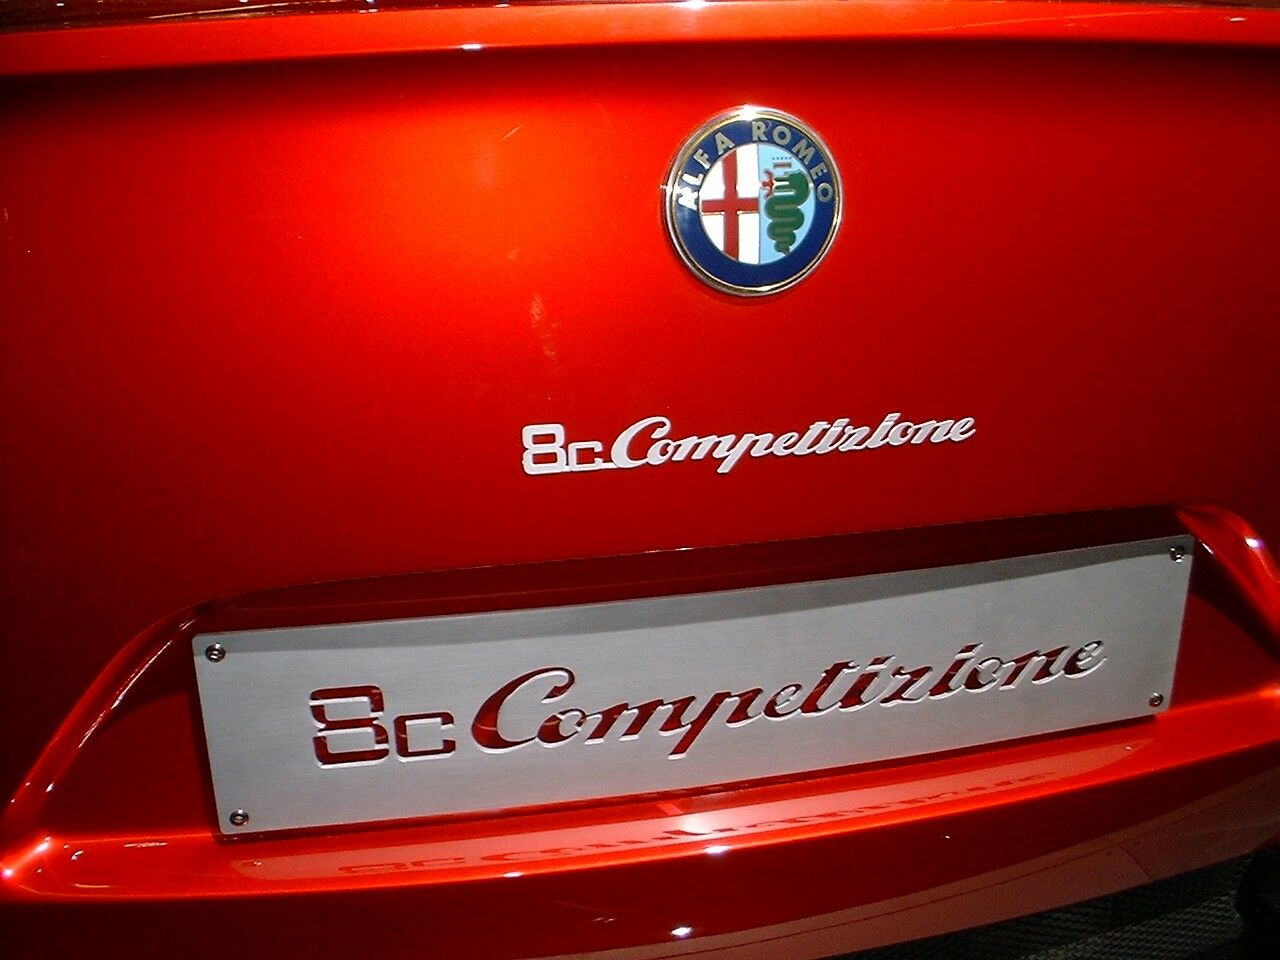 Alfa Romeo 8c Competizione is unveiled at the 2003 Frankfurt Motor Show